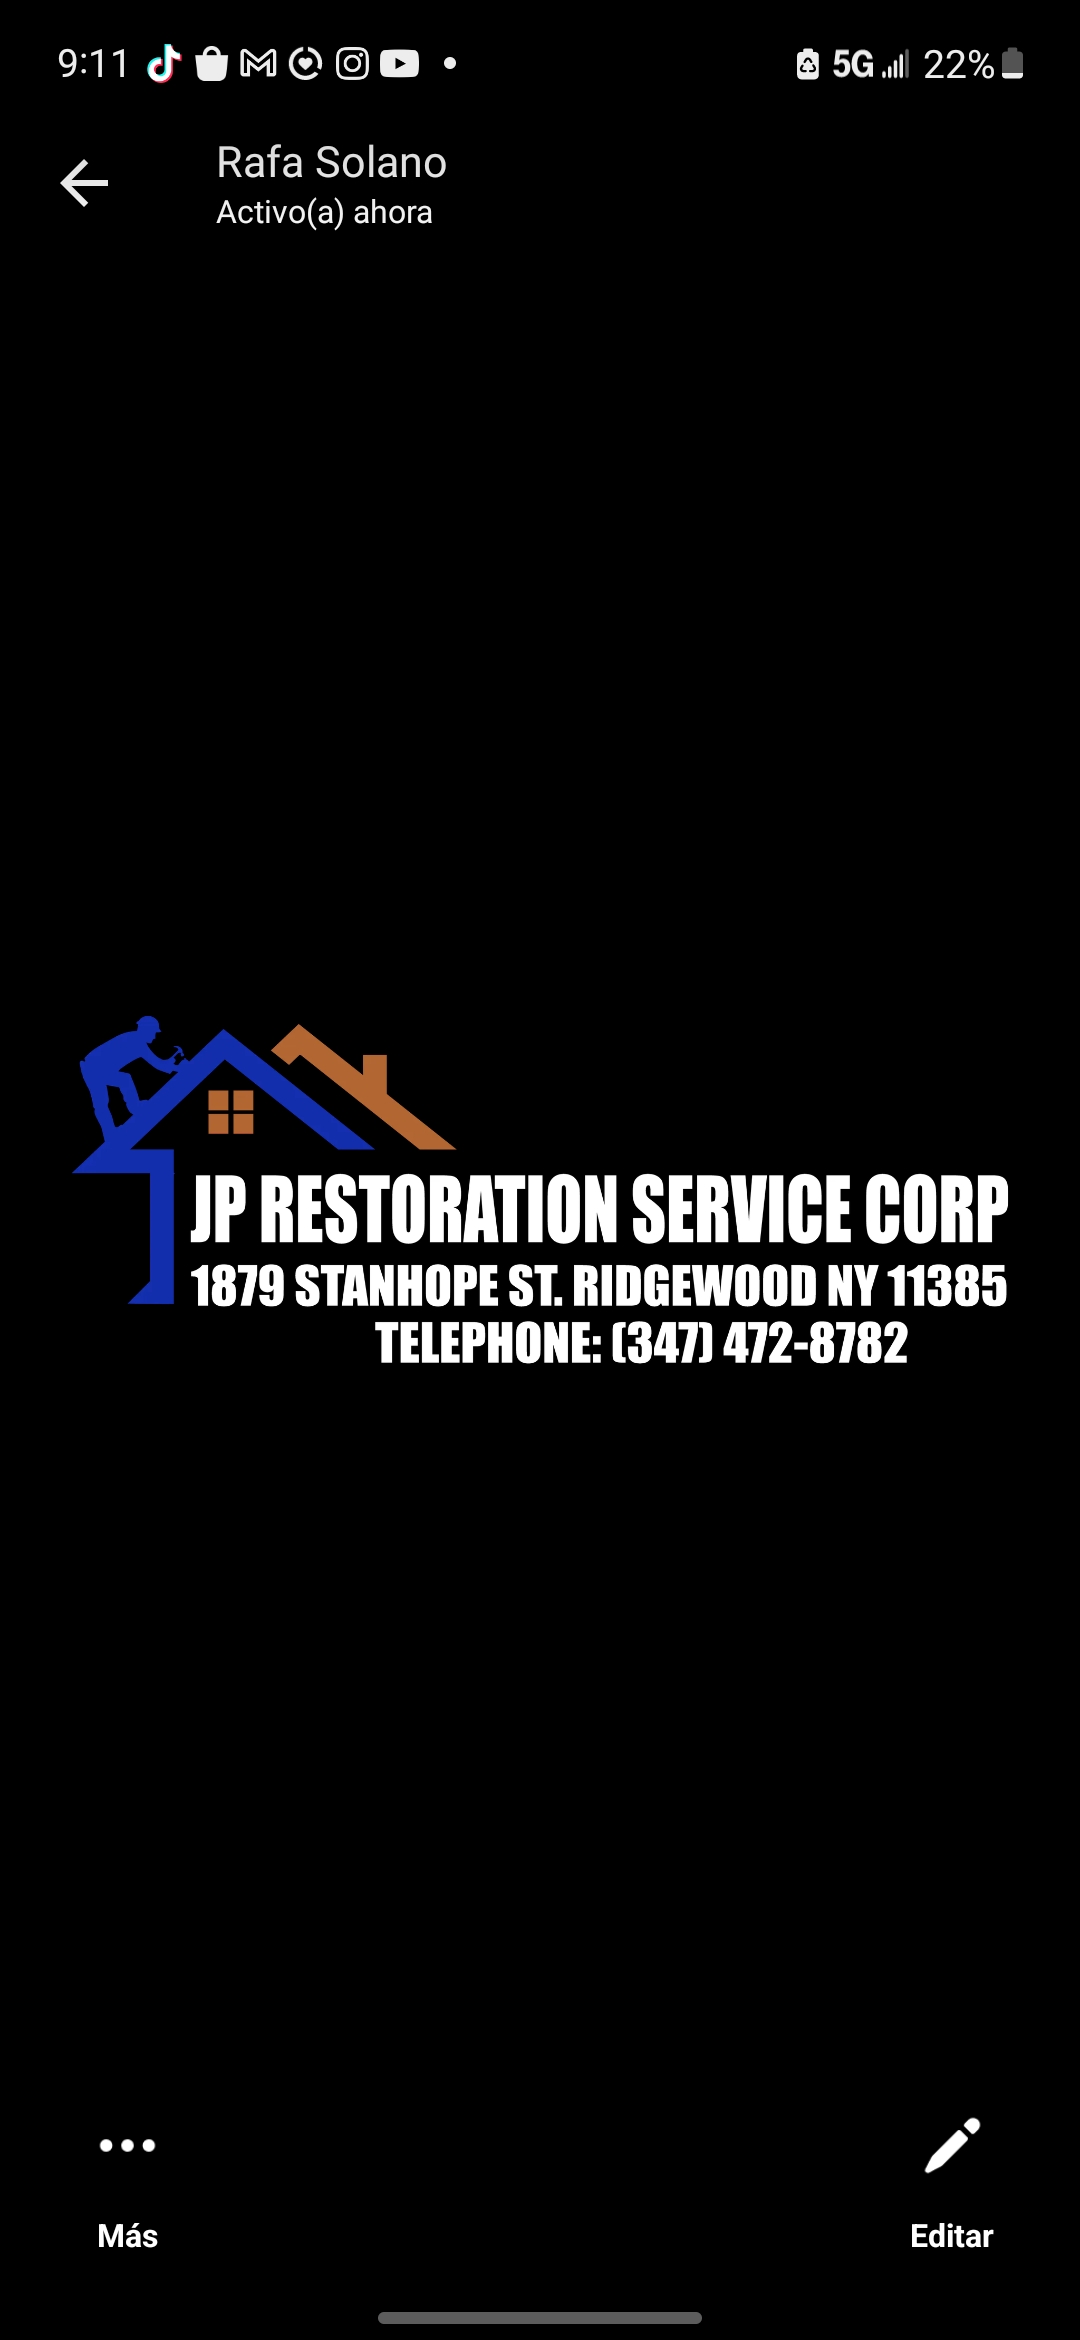 JP Restoration Services Corp. Logo